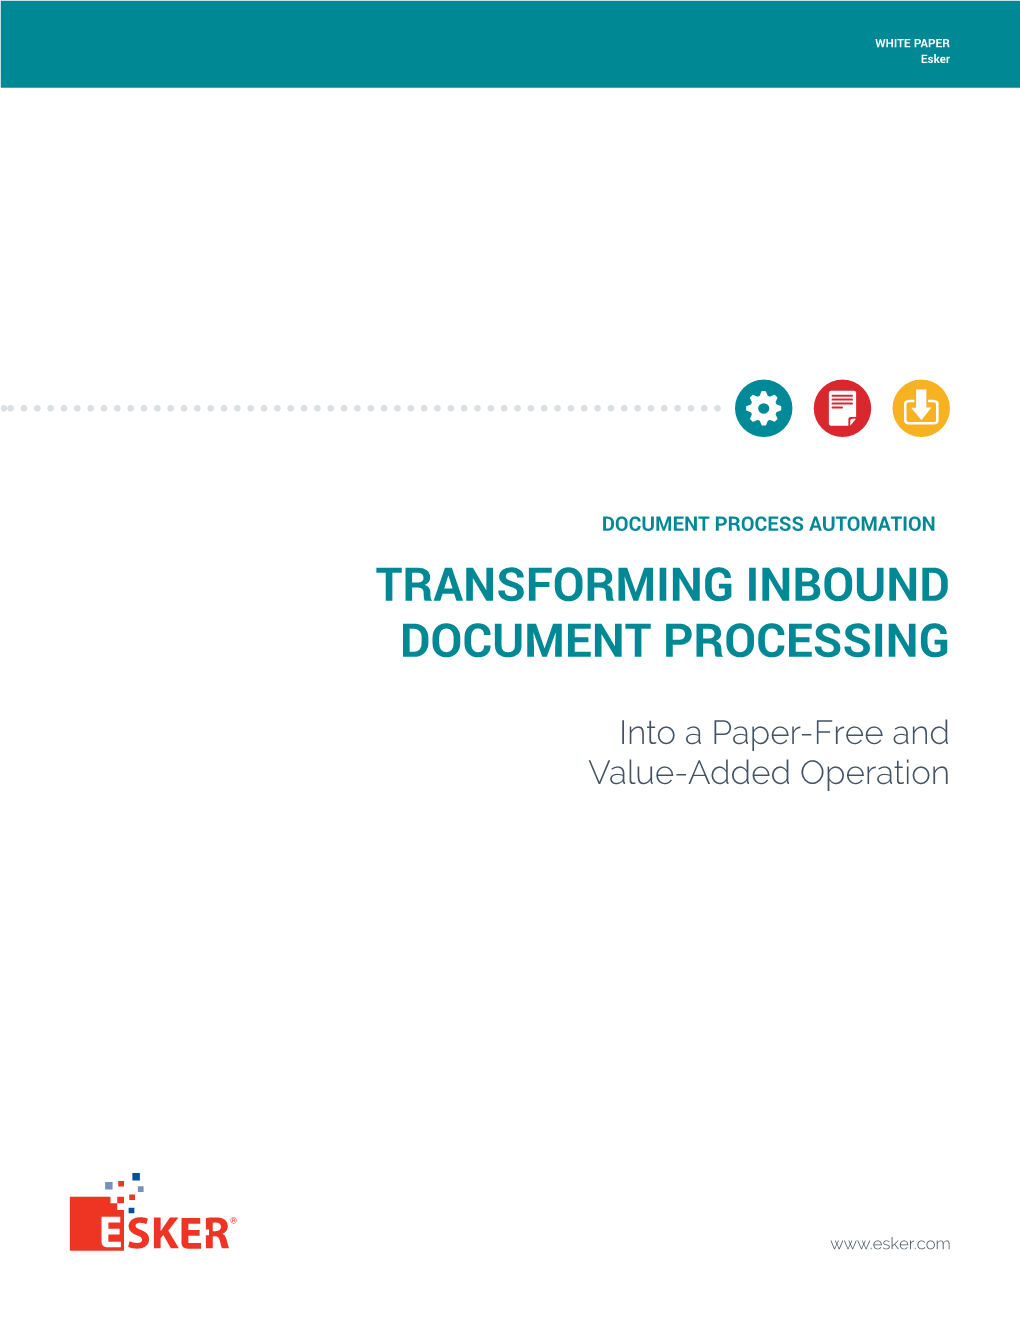 Transforming Inbound Document Processing